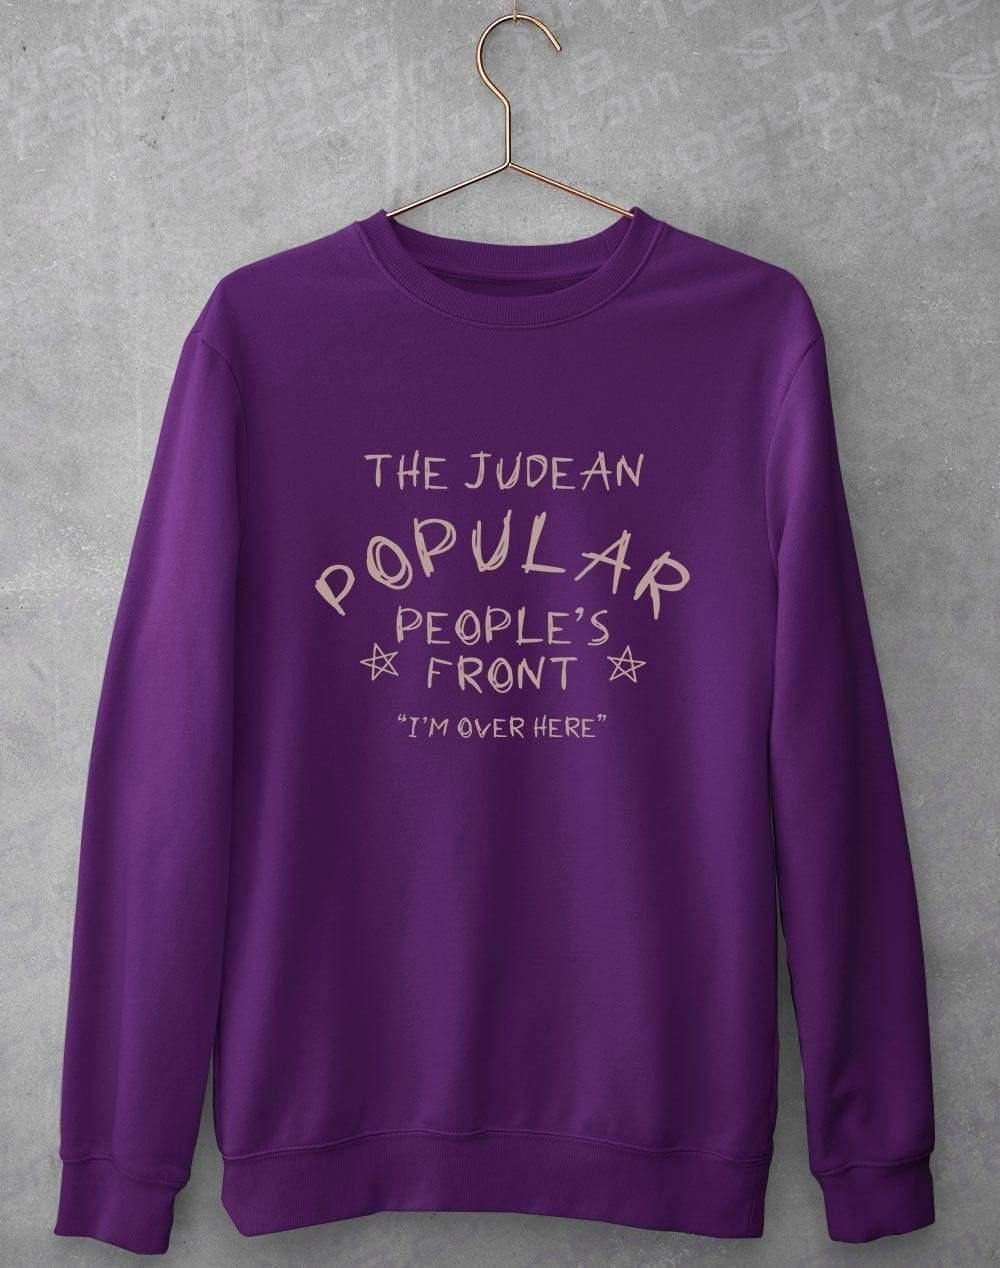 Judean Pupular Peoples Front Sweatshirt S / Purple  - Off World Tees